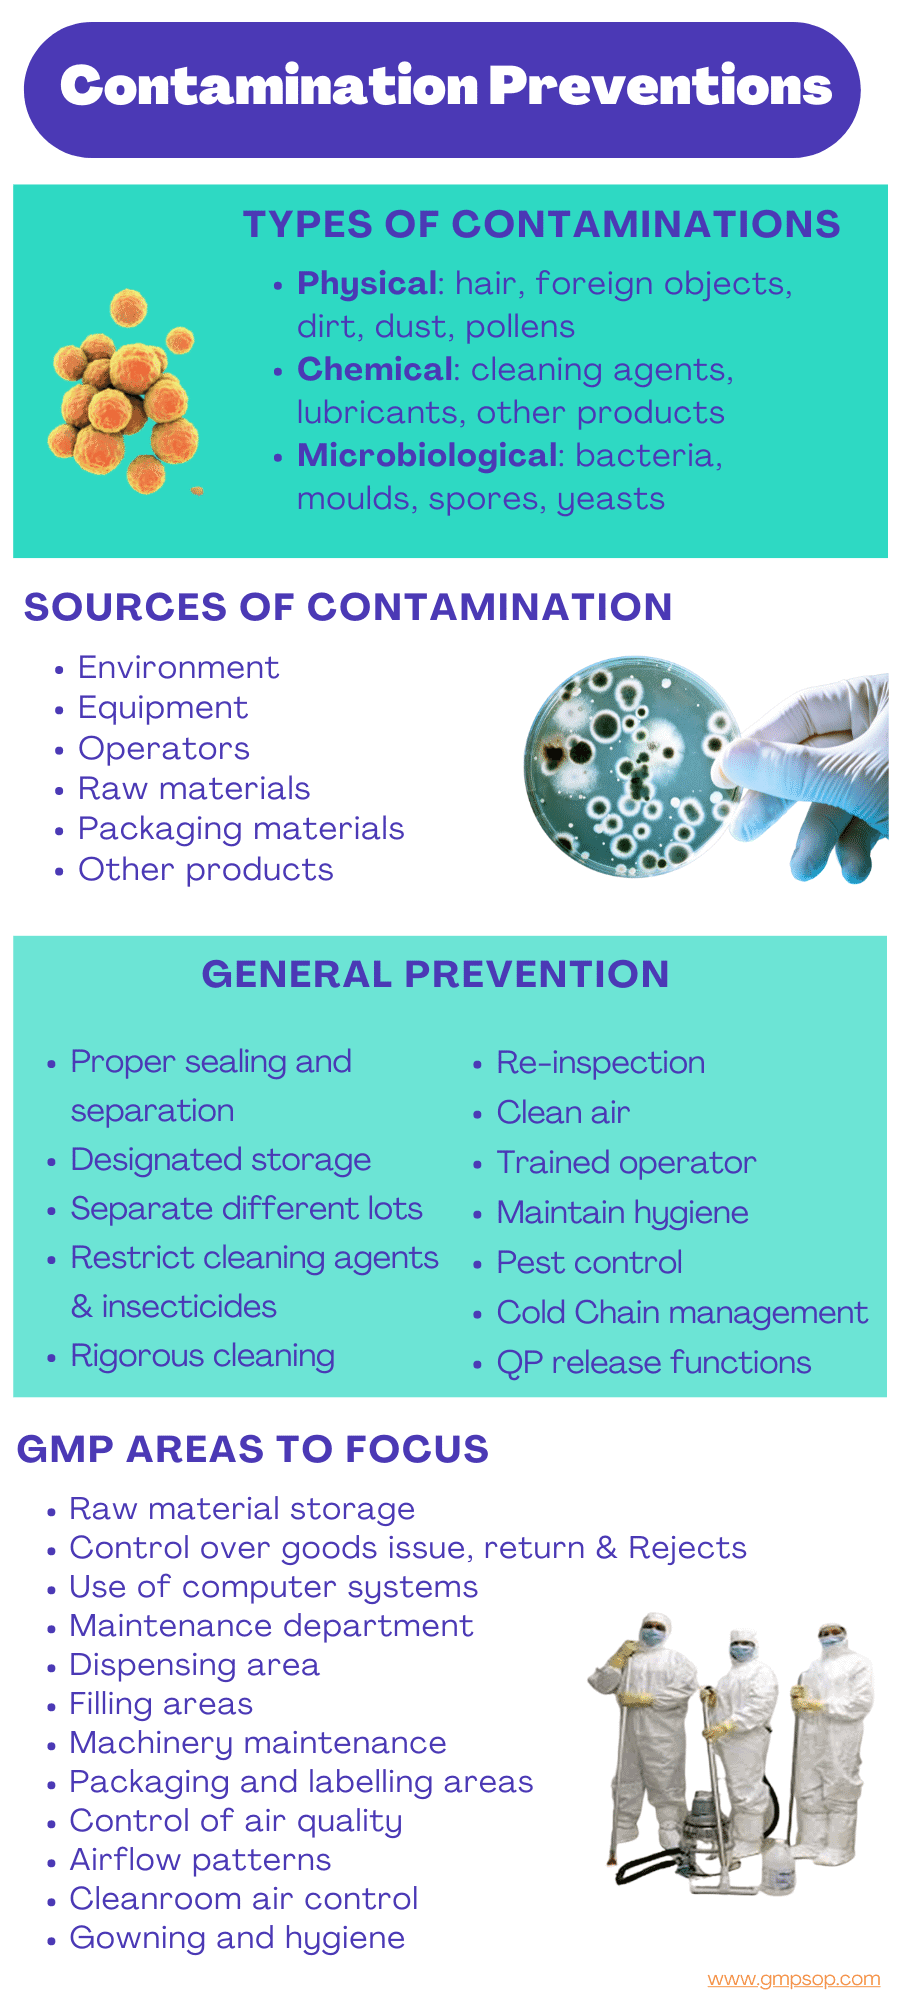 Cross Contamination controls 1